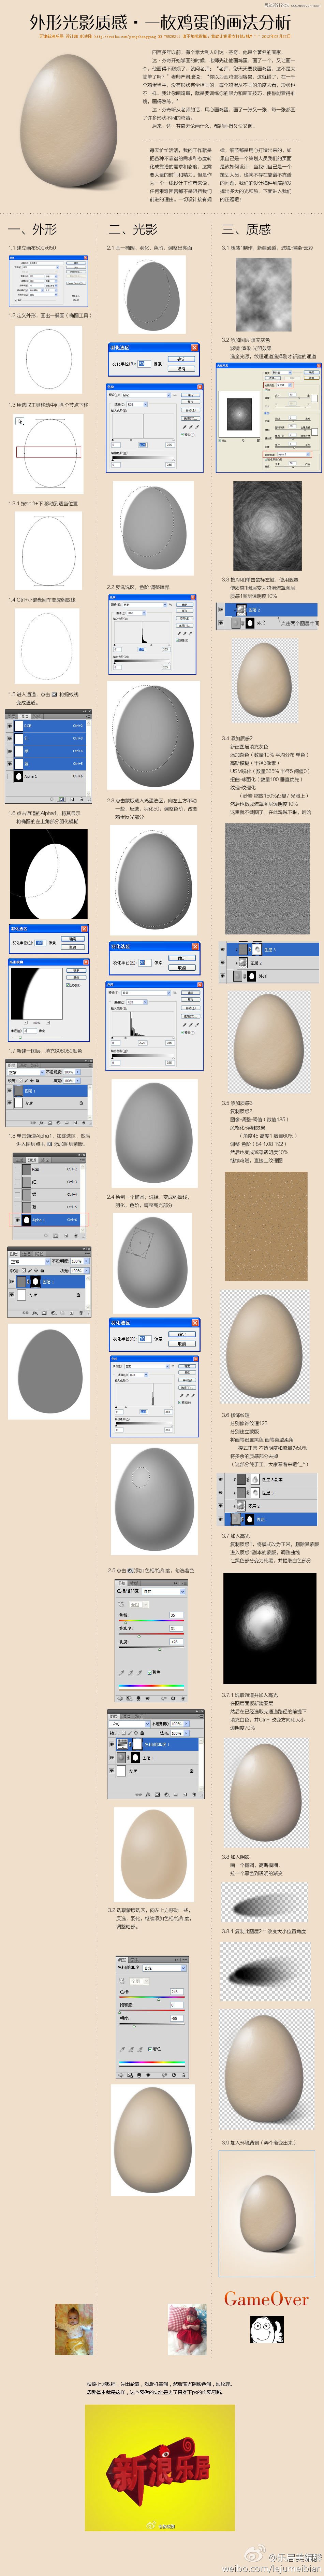 Photoshop通过鸡蛋画法解析外形光影质感,PS教程,图老师教程网